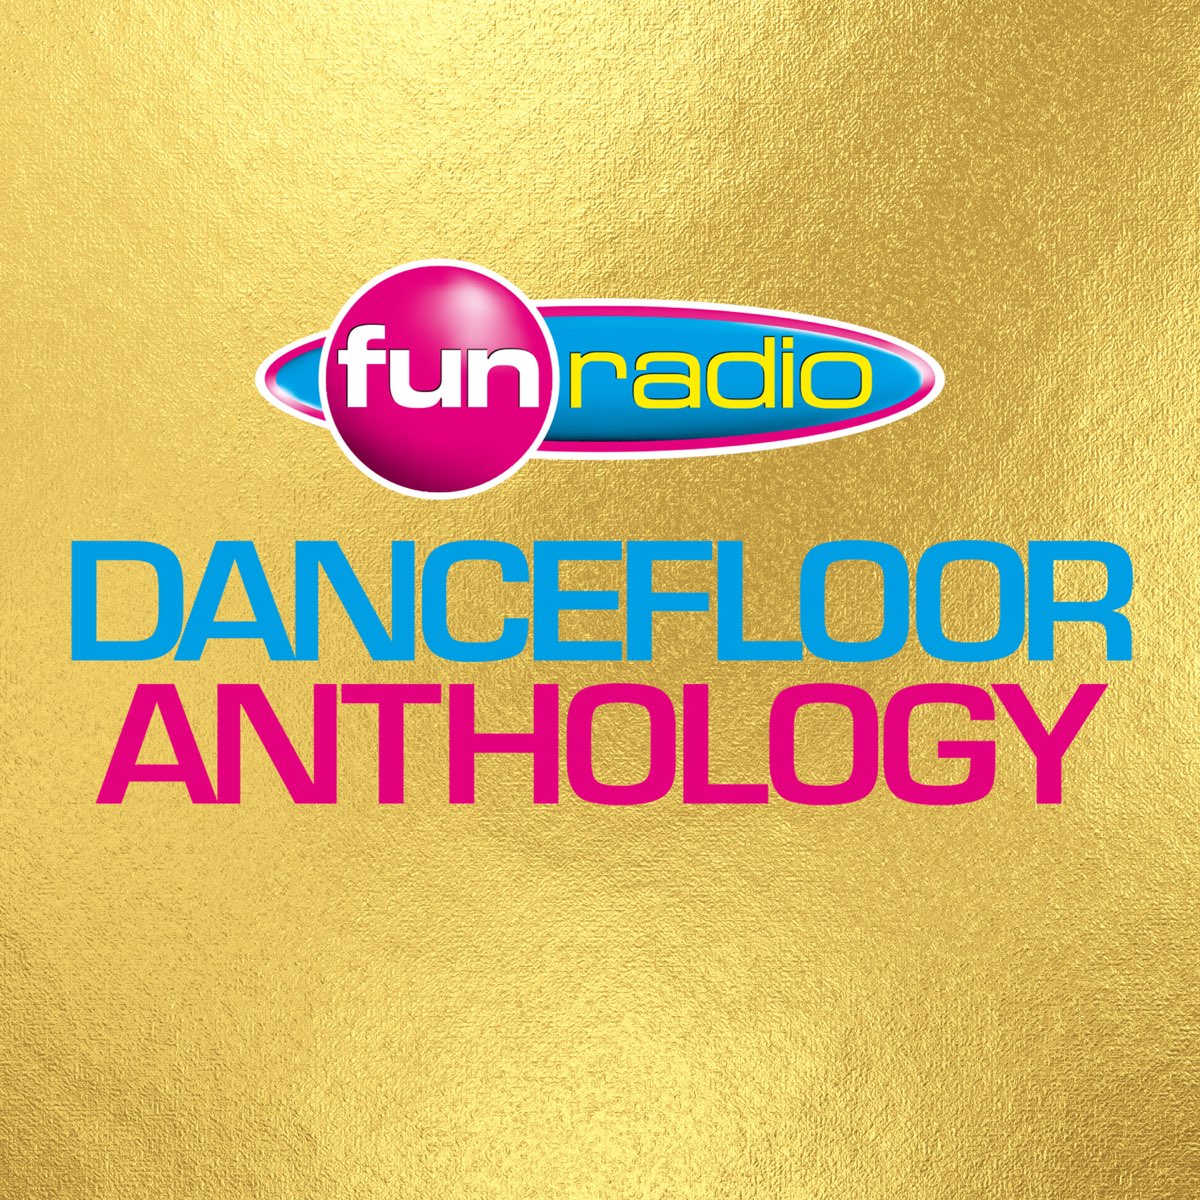 Fun Radio Dancefloor Anthology - Album by Various Artists - Apple Music